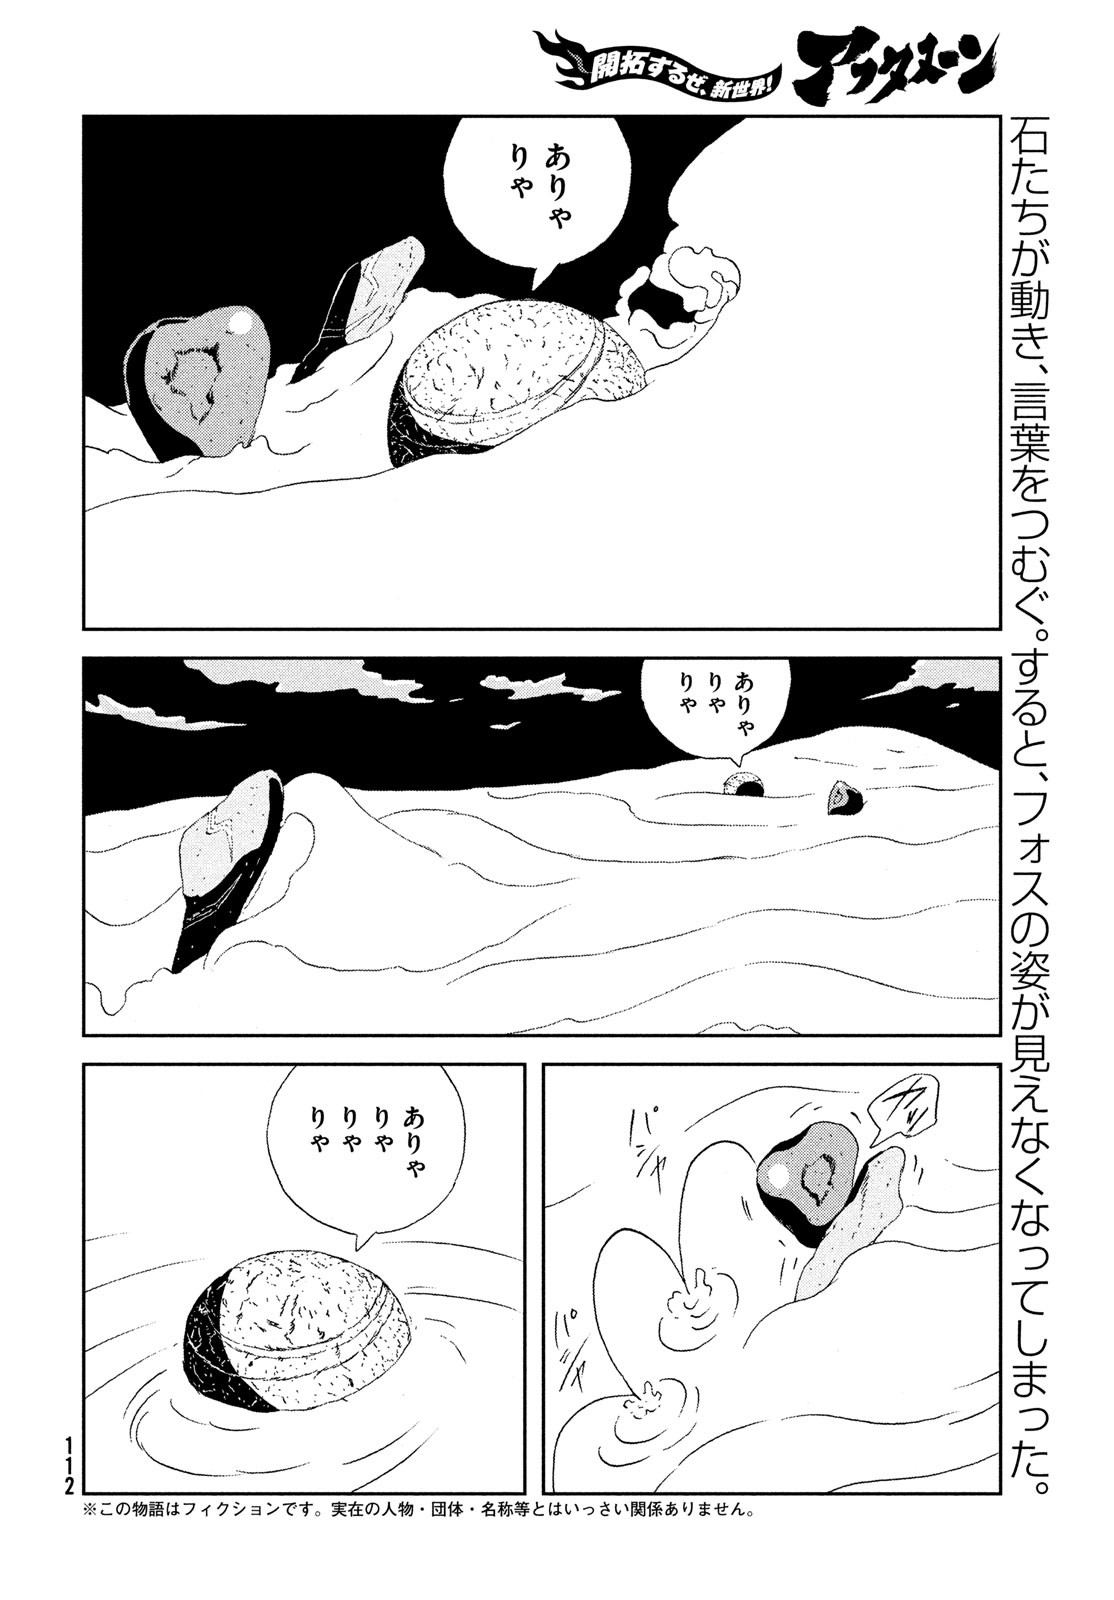 Houseki no Kuni - Chapter 101 - Page 2